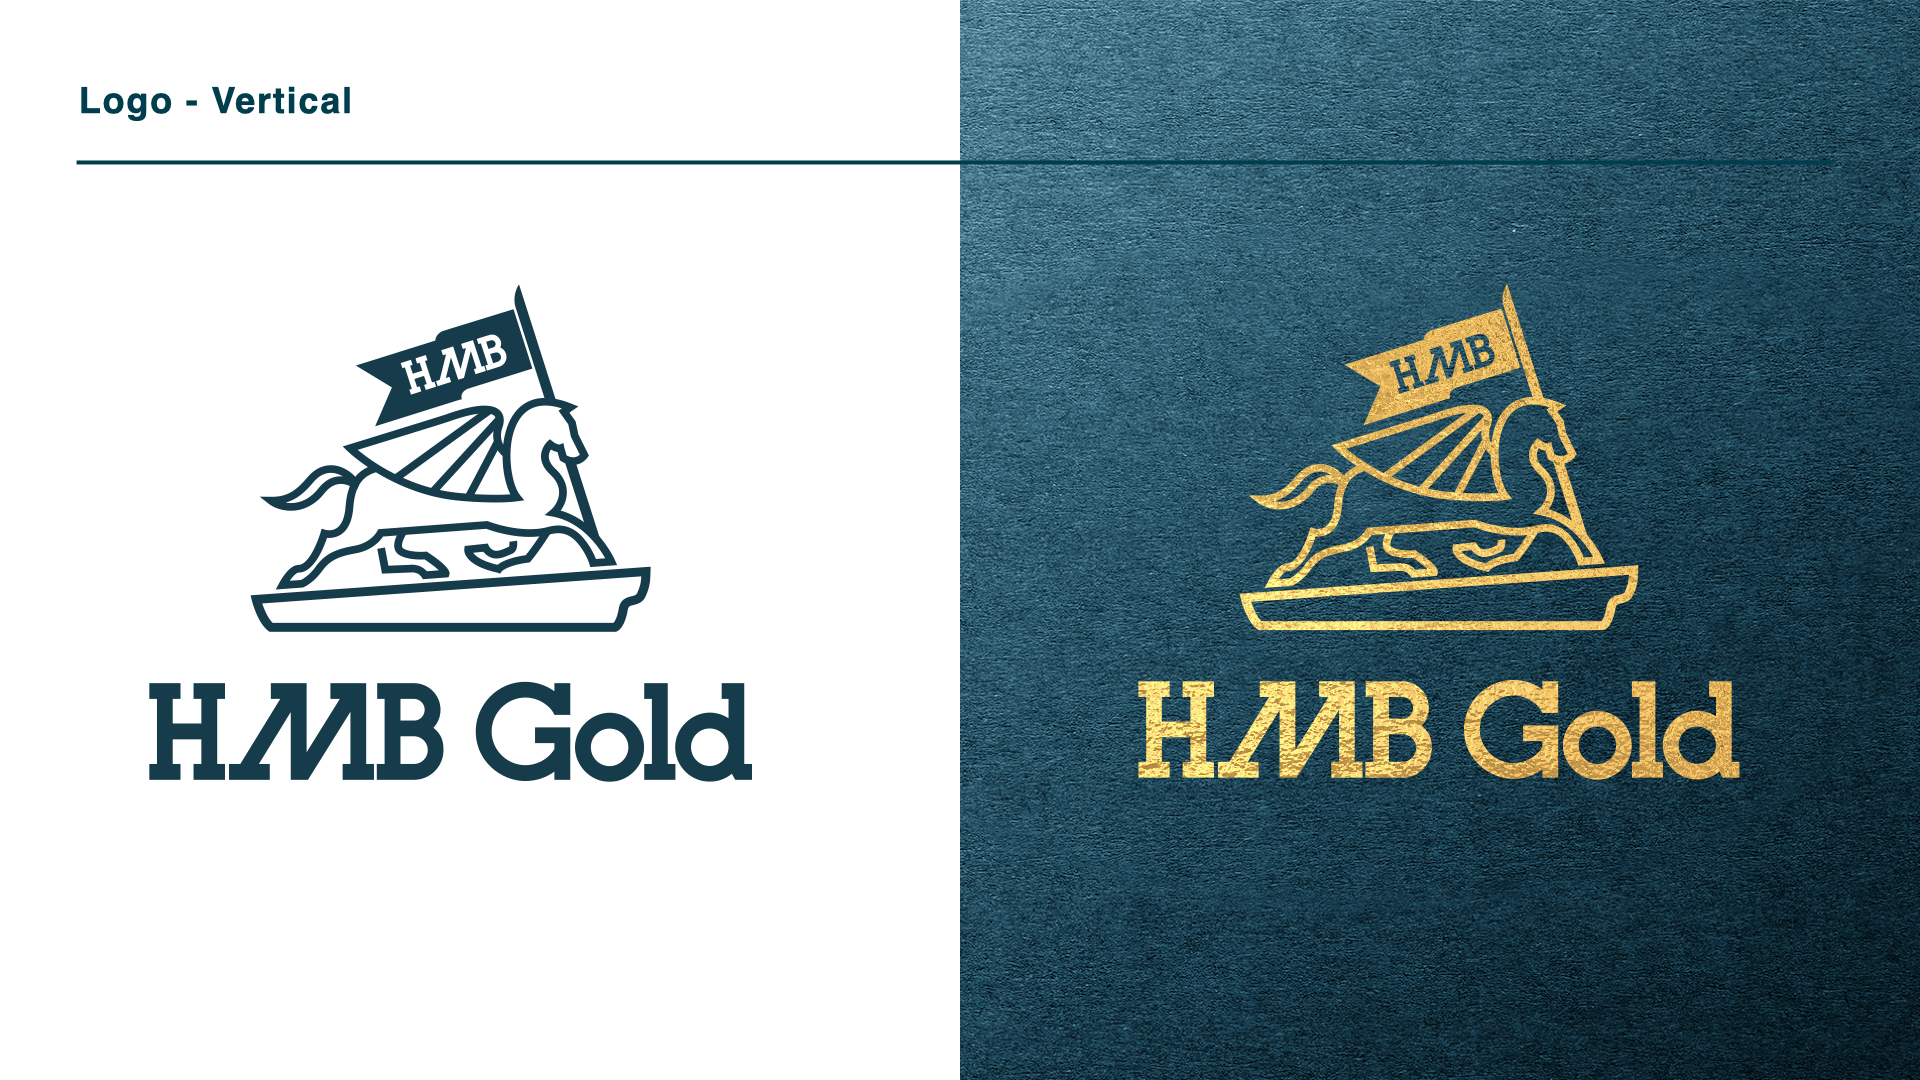 HMB Brand Logo